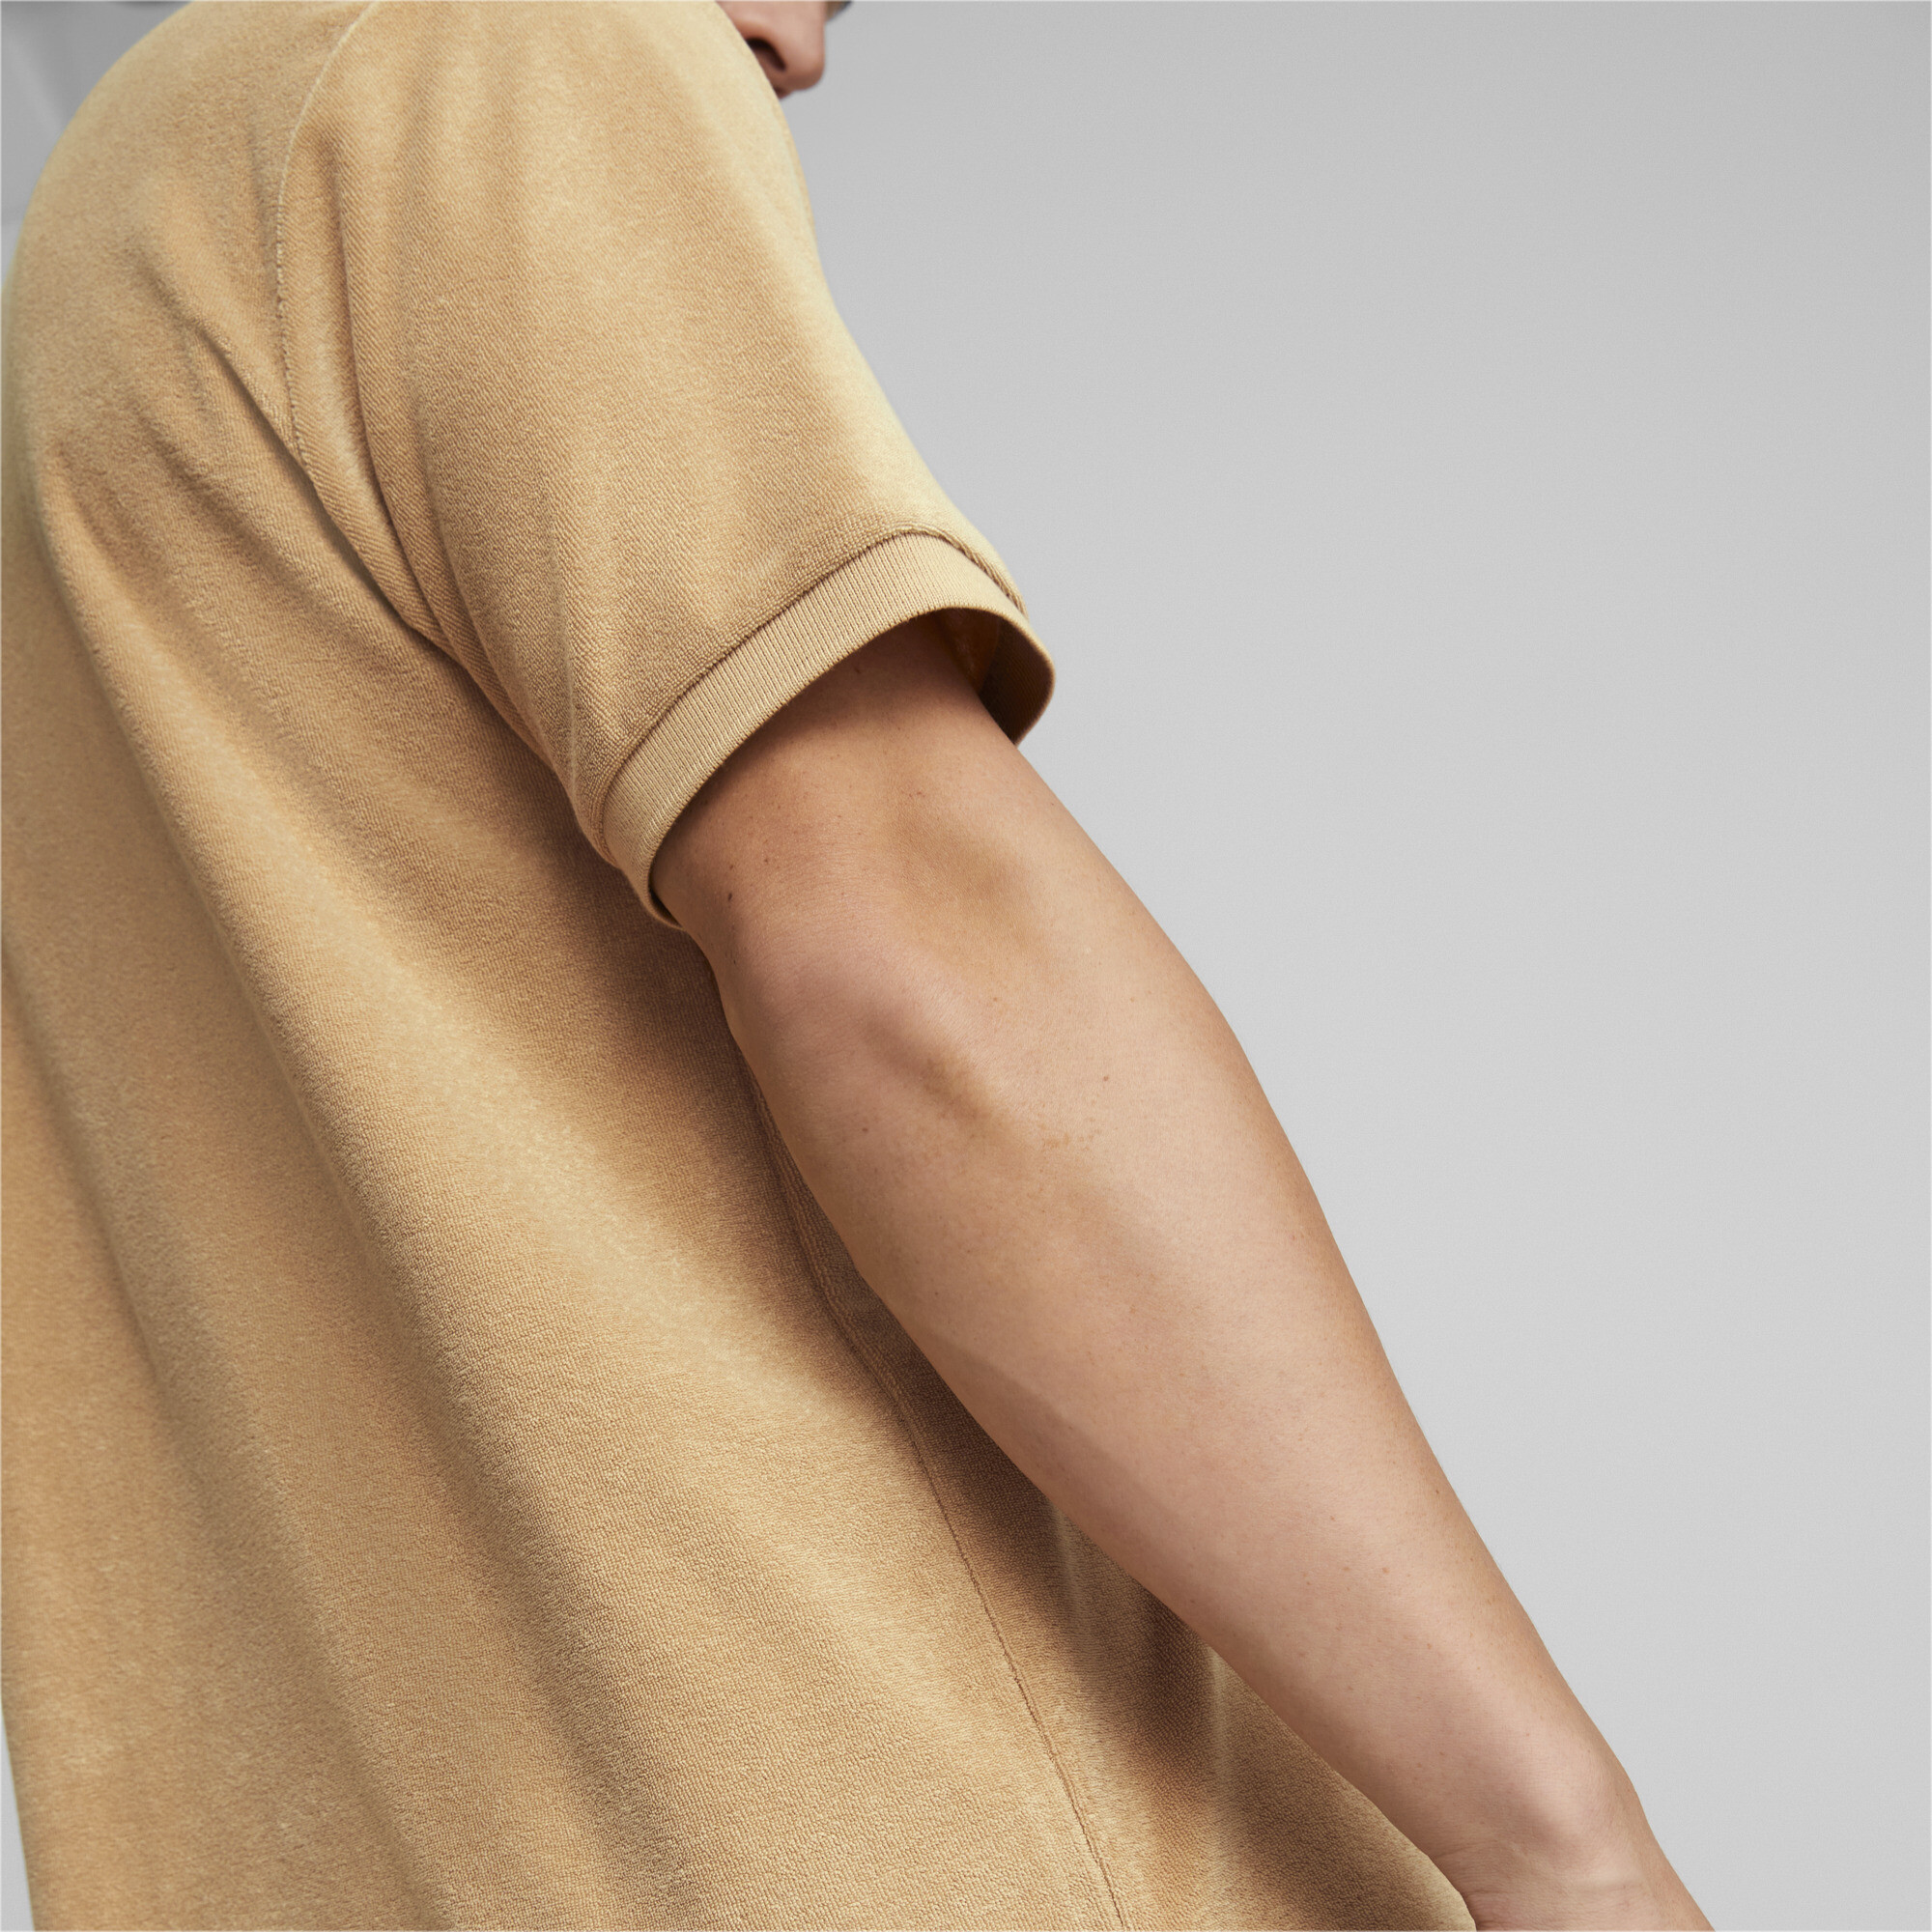 Men's Puma Classics Towelling Polo Shirt T-Shirt, Beige T-Shirt, Size XL T-Shirt, Clothing